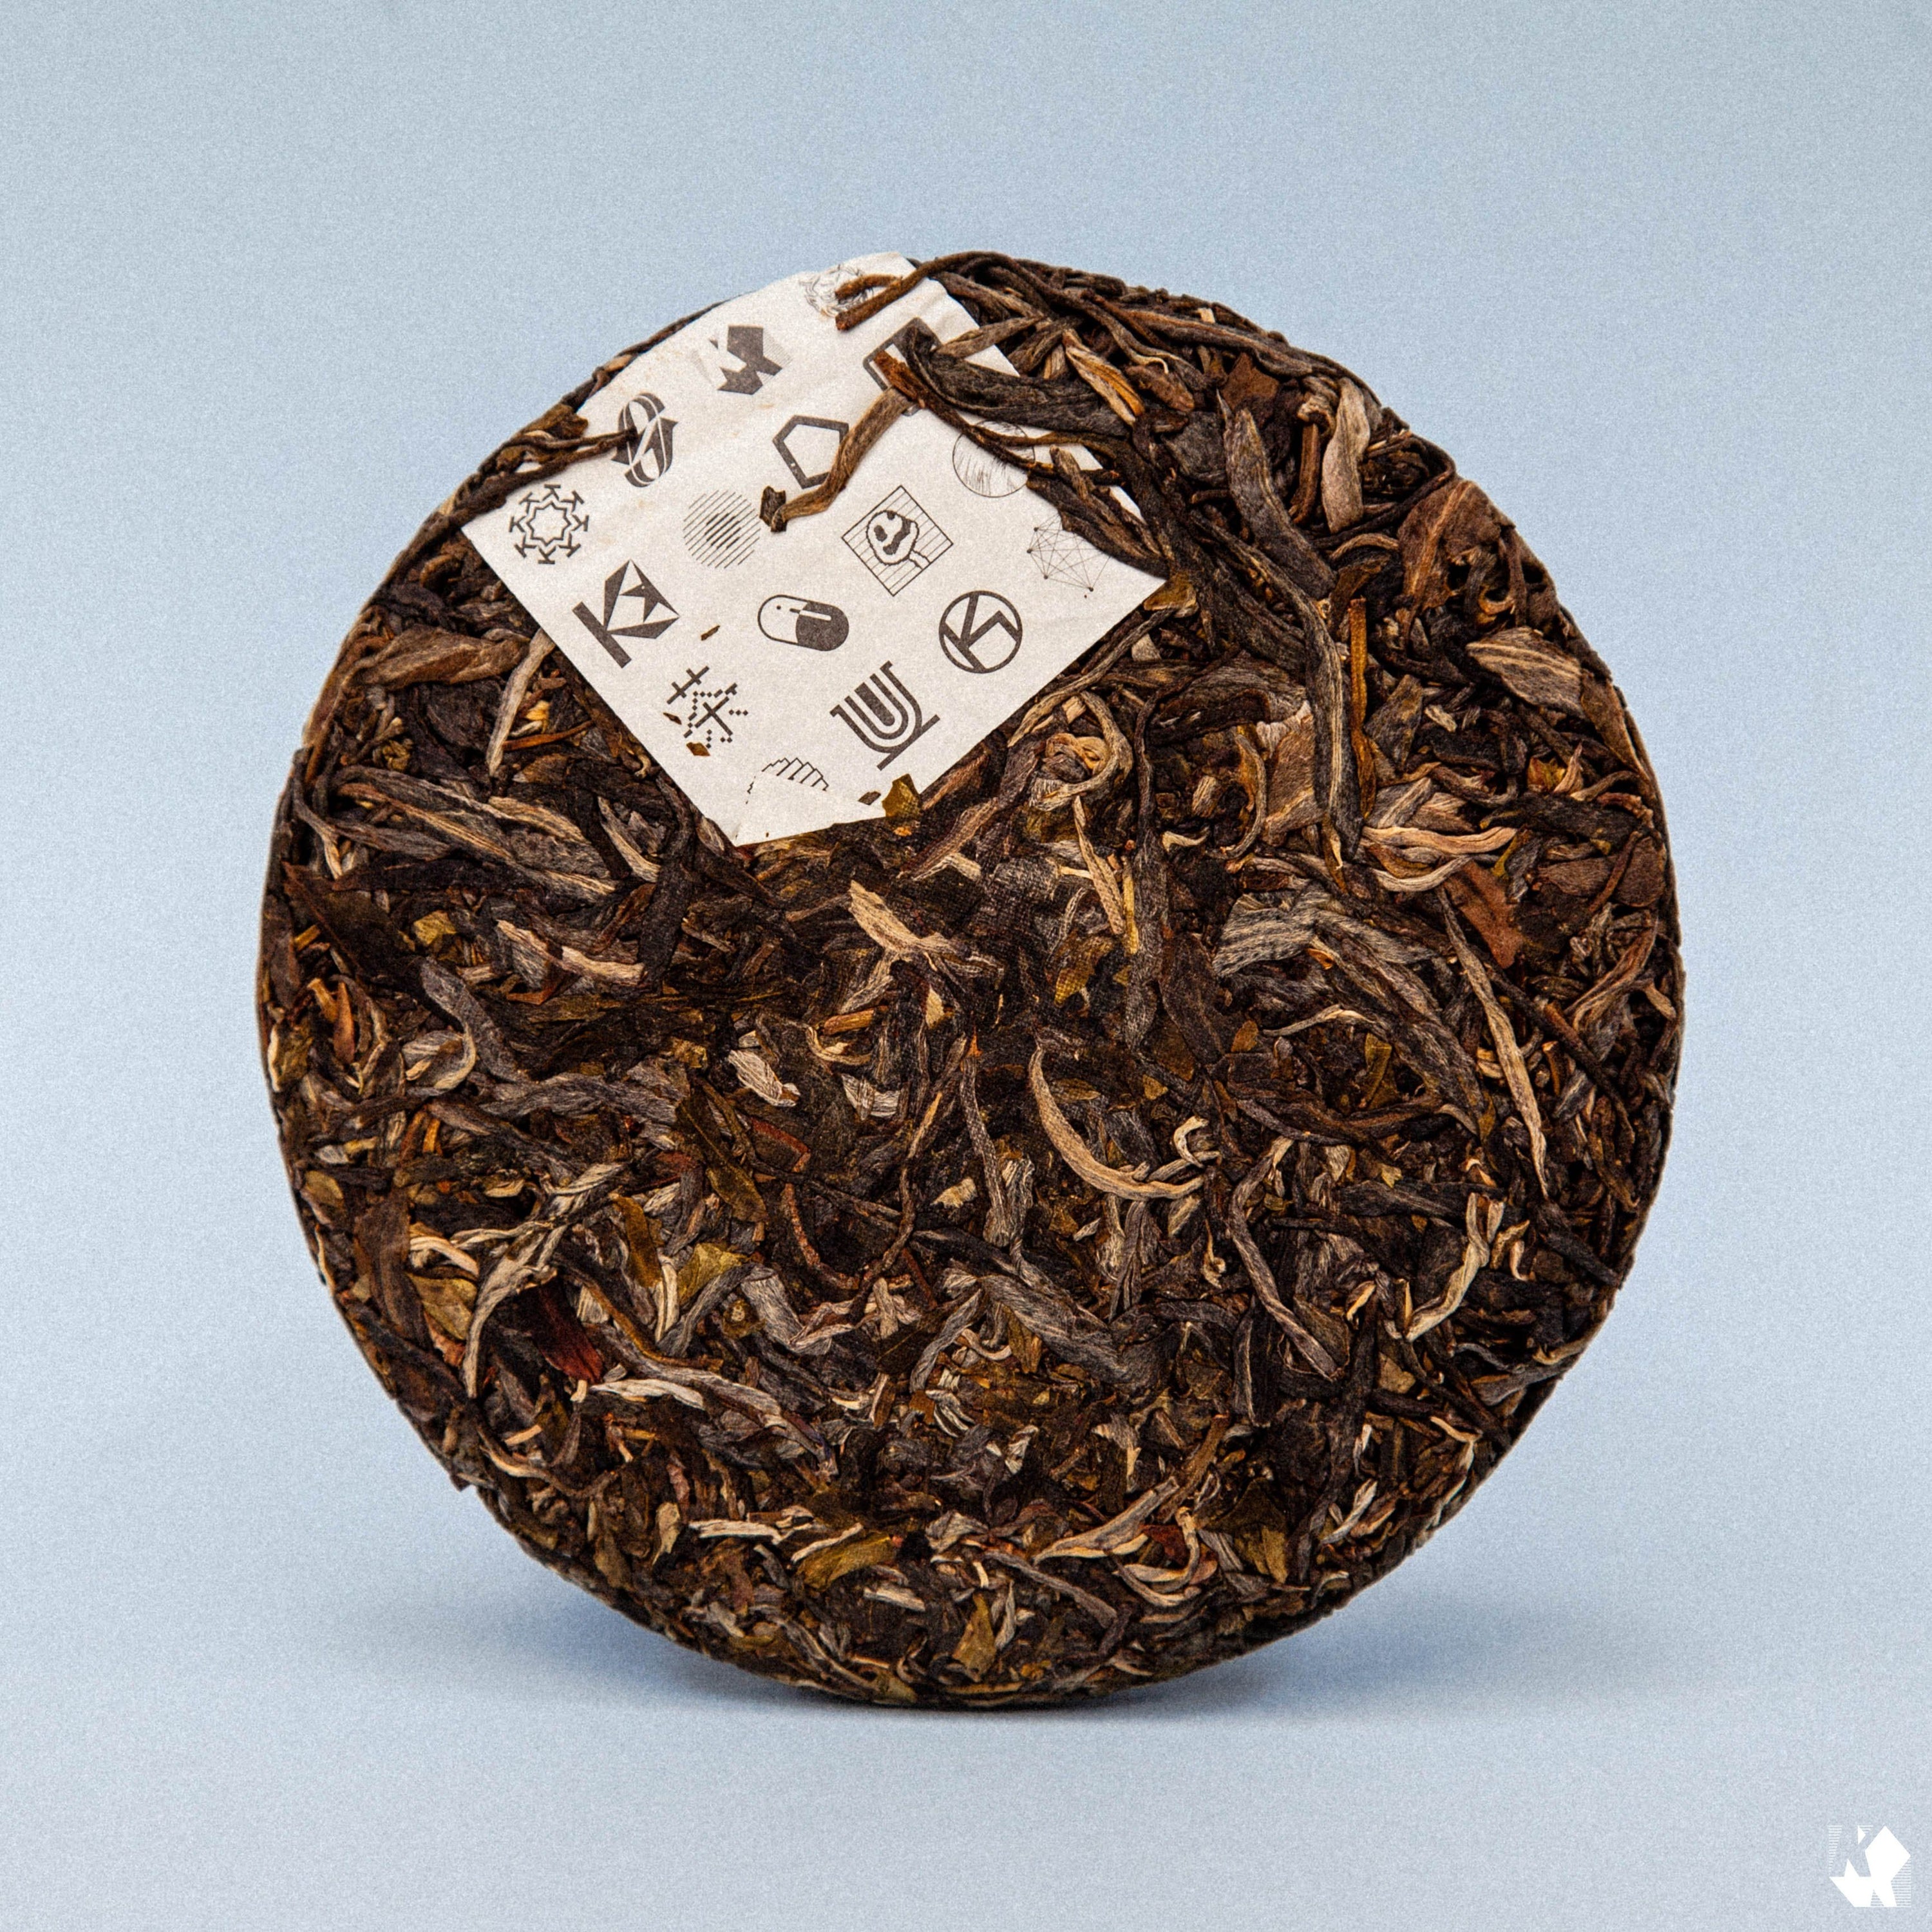 2021 'PRISMO' Raw Puer Tea KUURACORP 25g sample 